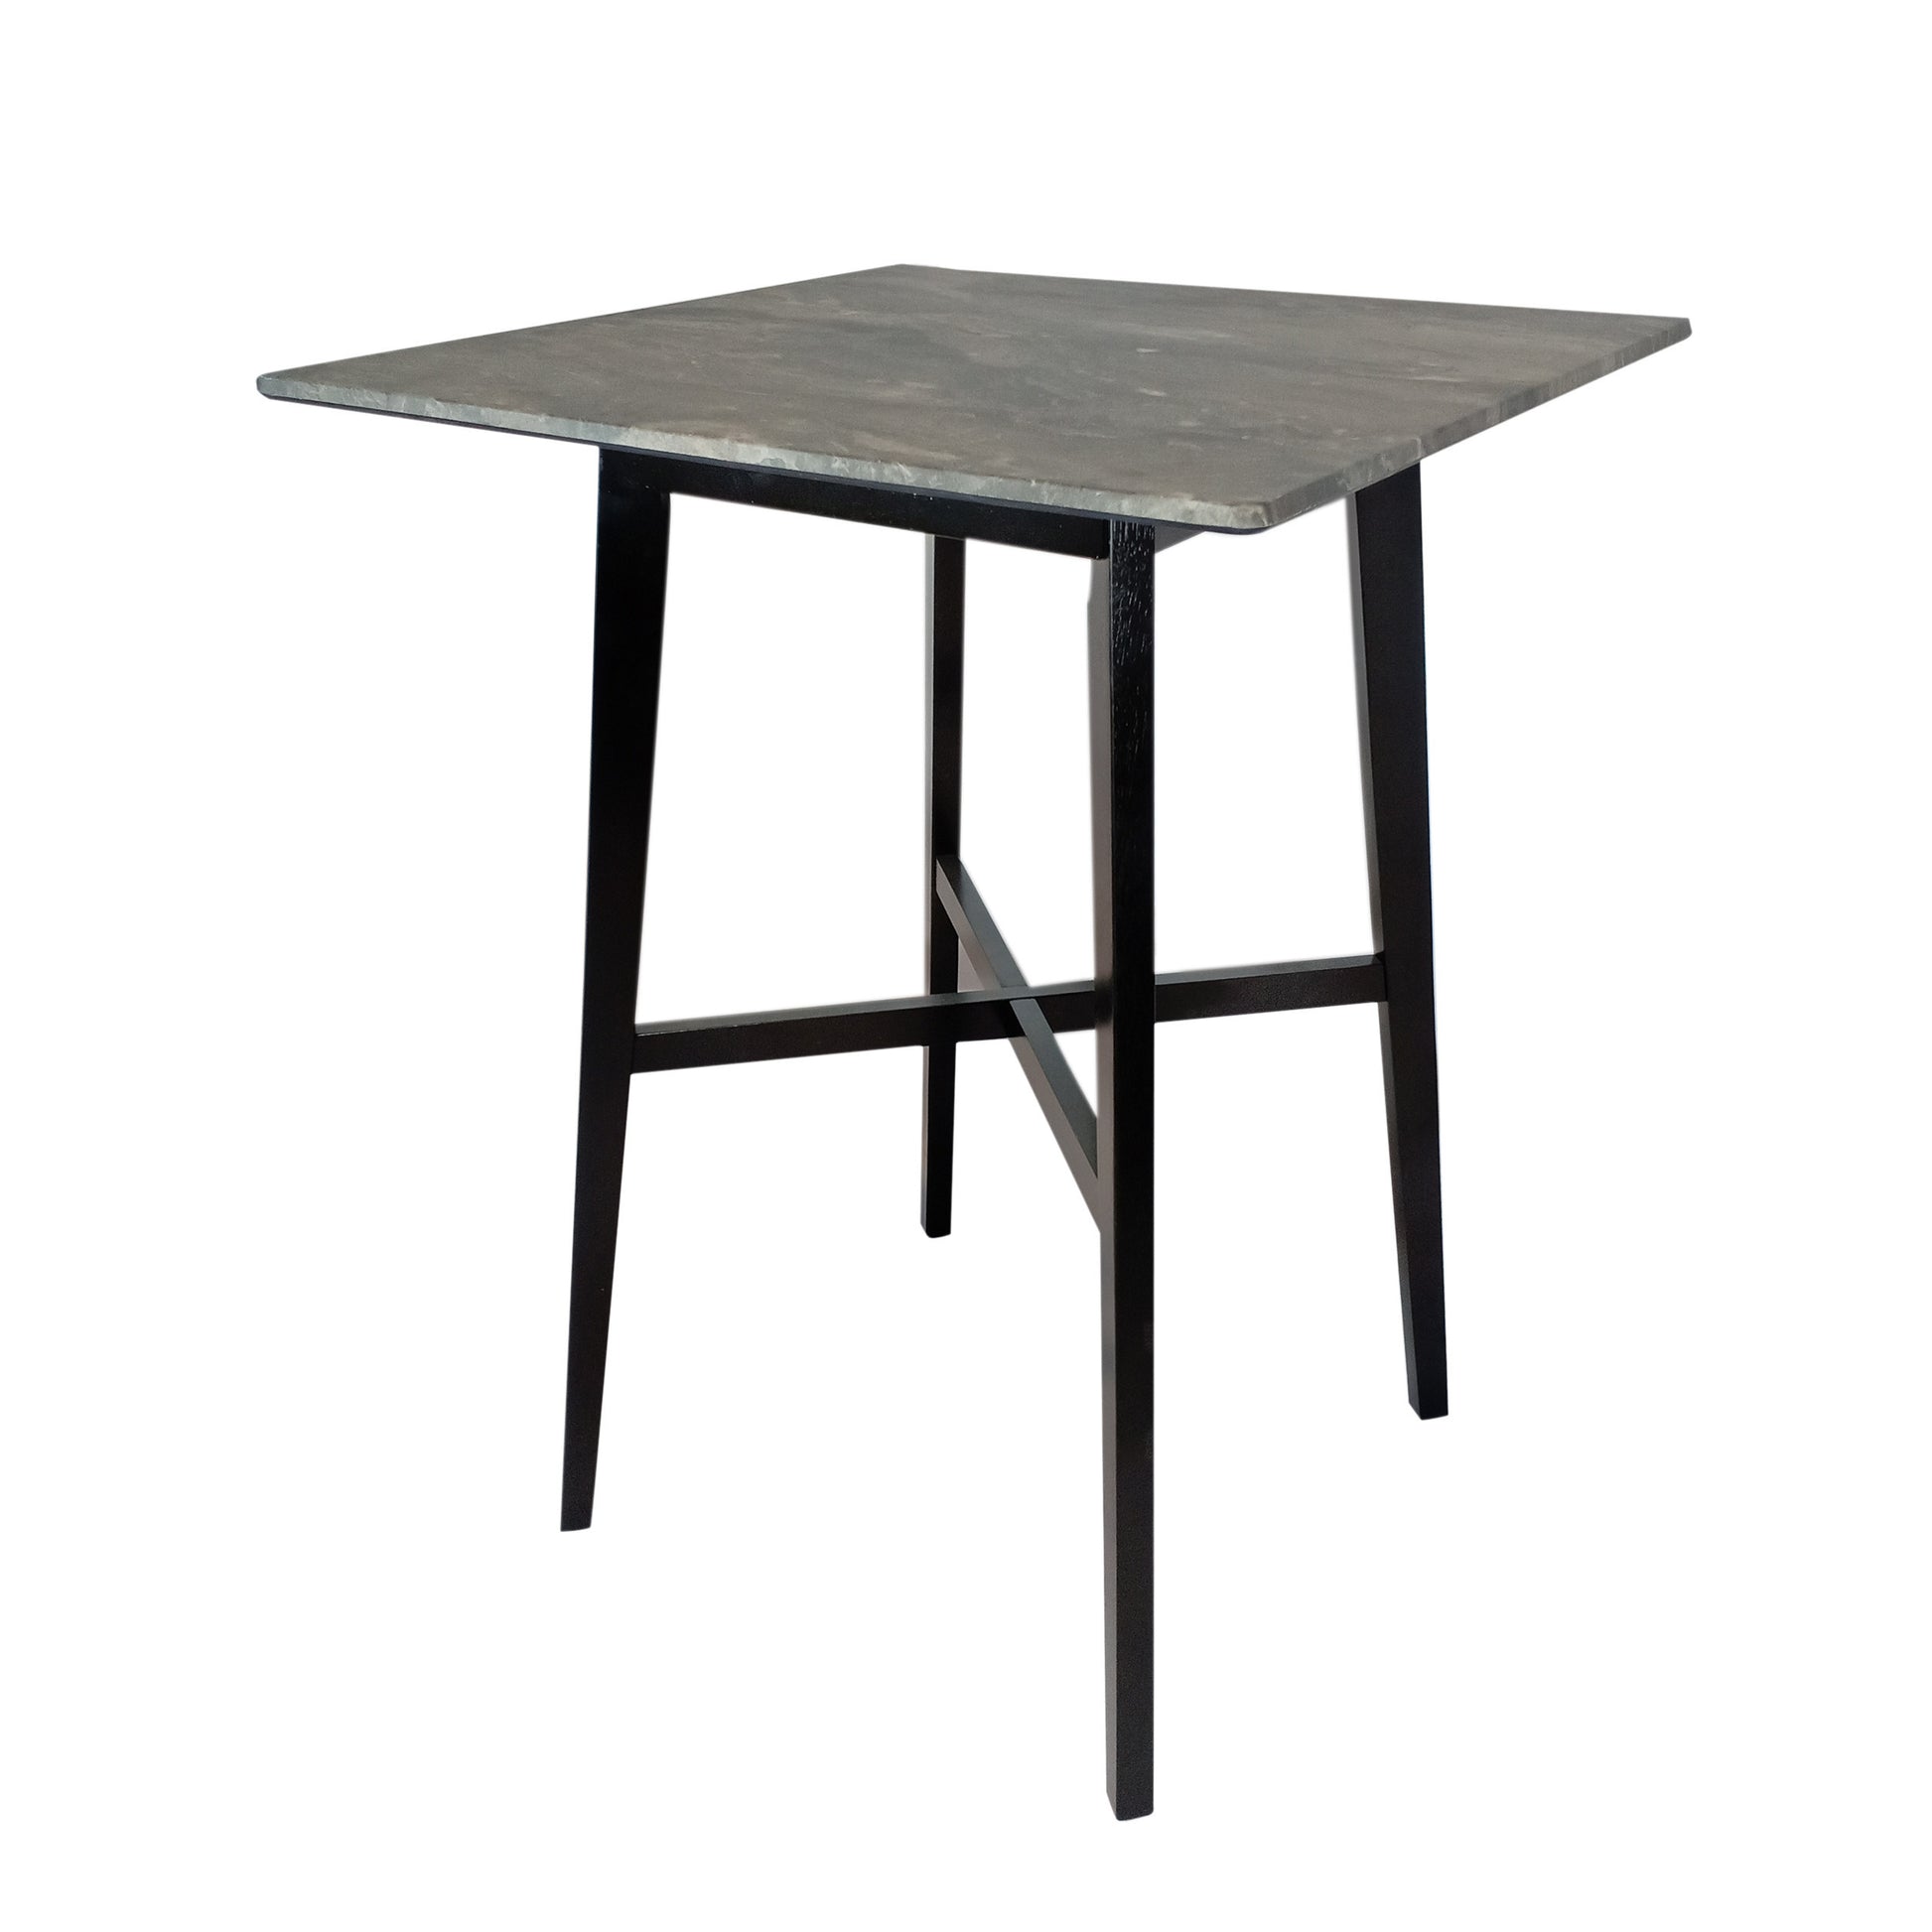 Modern Bar Height 42" Dining Table, Rubberwood Legs grey+black-rubberwood-square-mdf